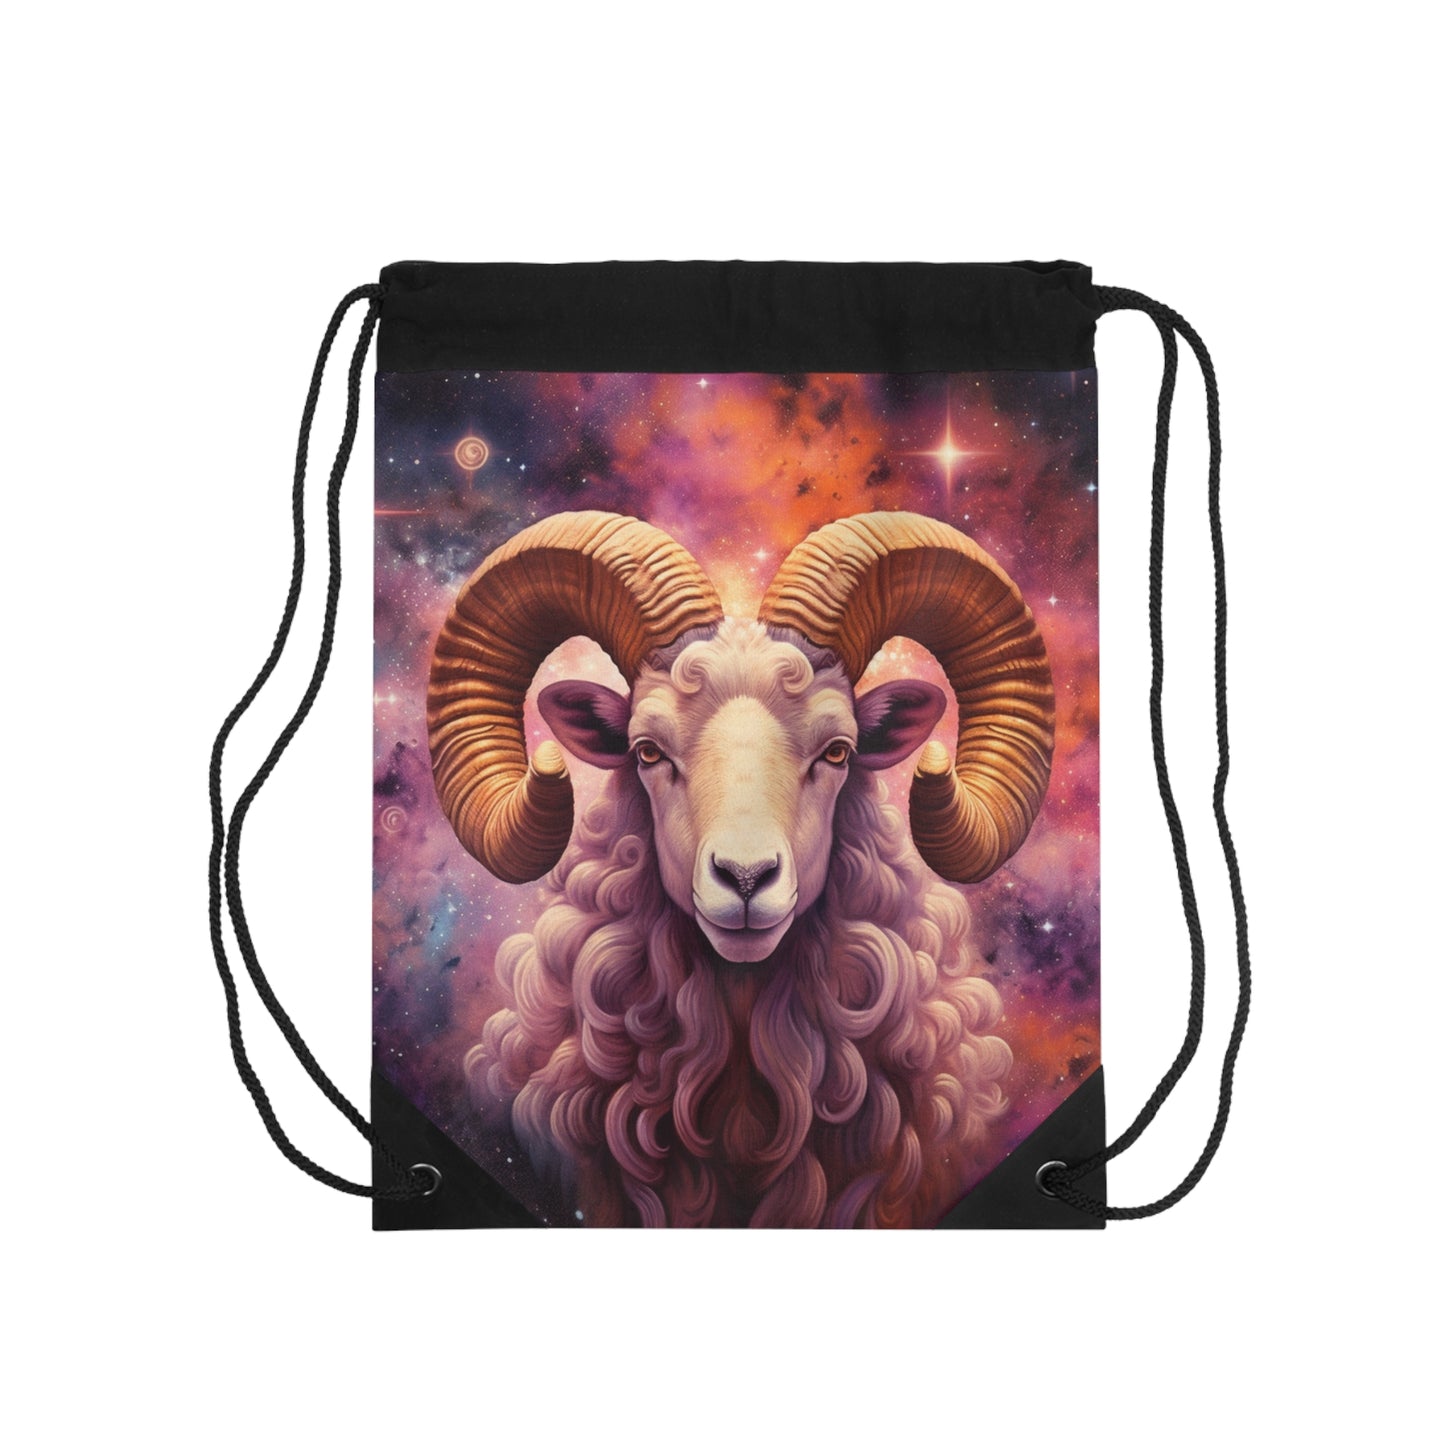 Mystic Aries Constellation - Vibrant Astrology Art - Zodiac Ram - Drawstring Bag